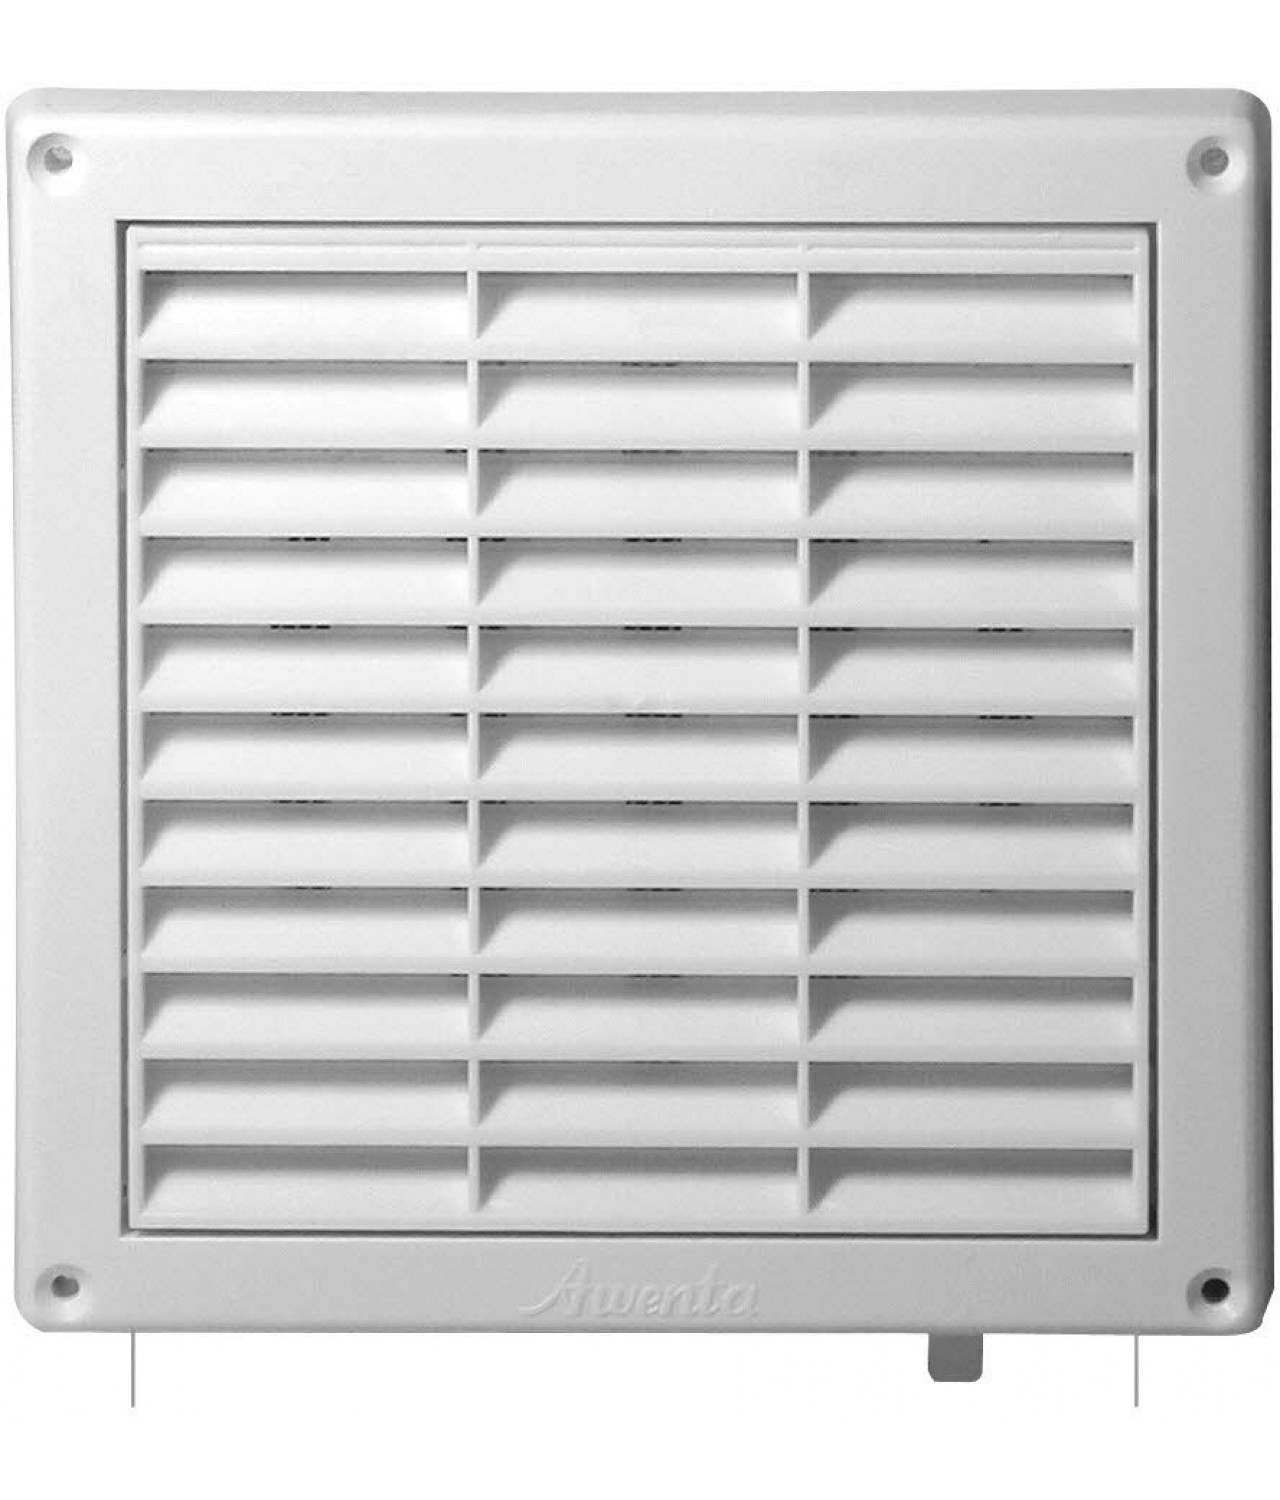 Ventilation grille with shutter GRT55, 165x165 mm, Ø100 mm - image